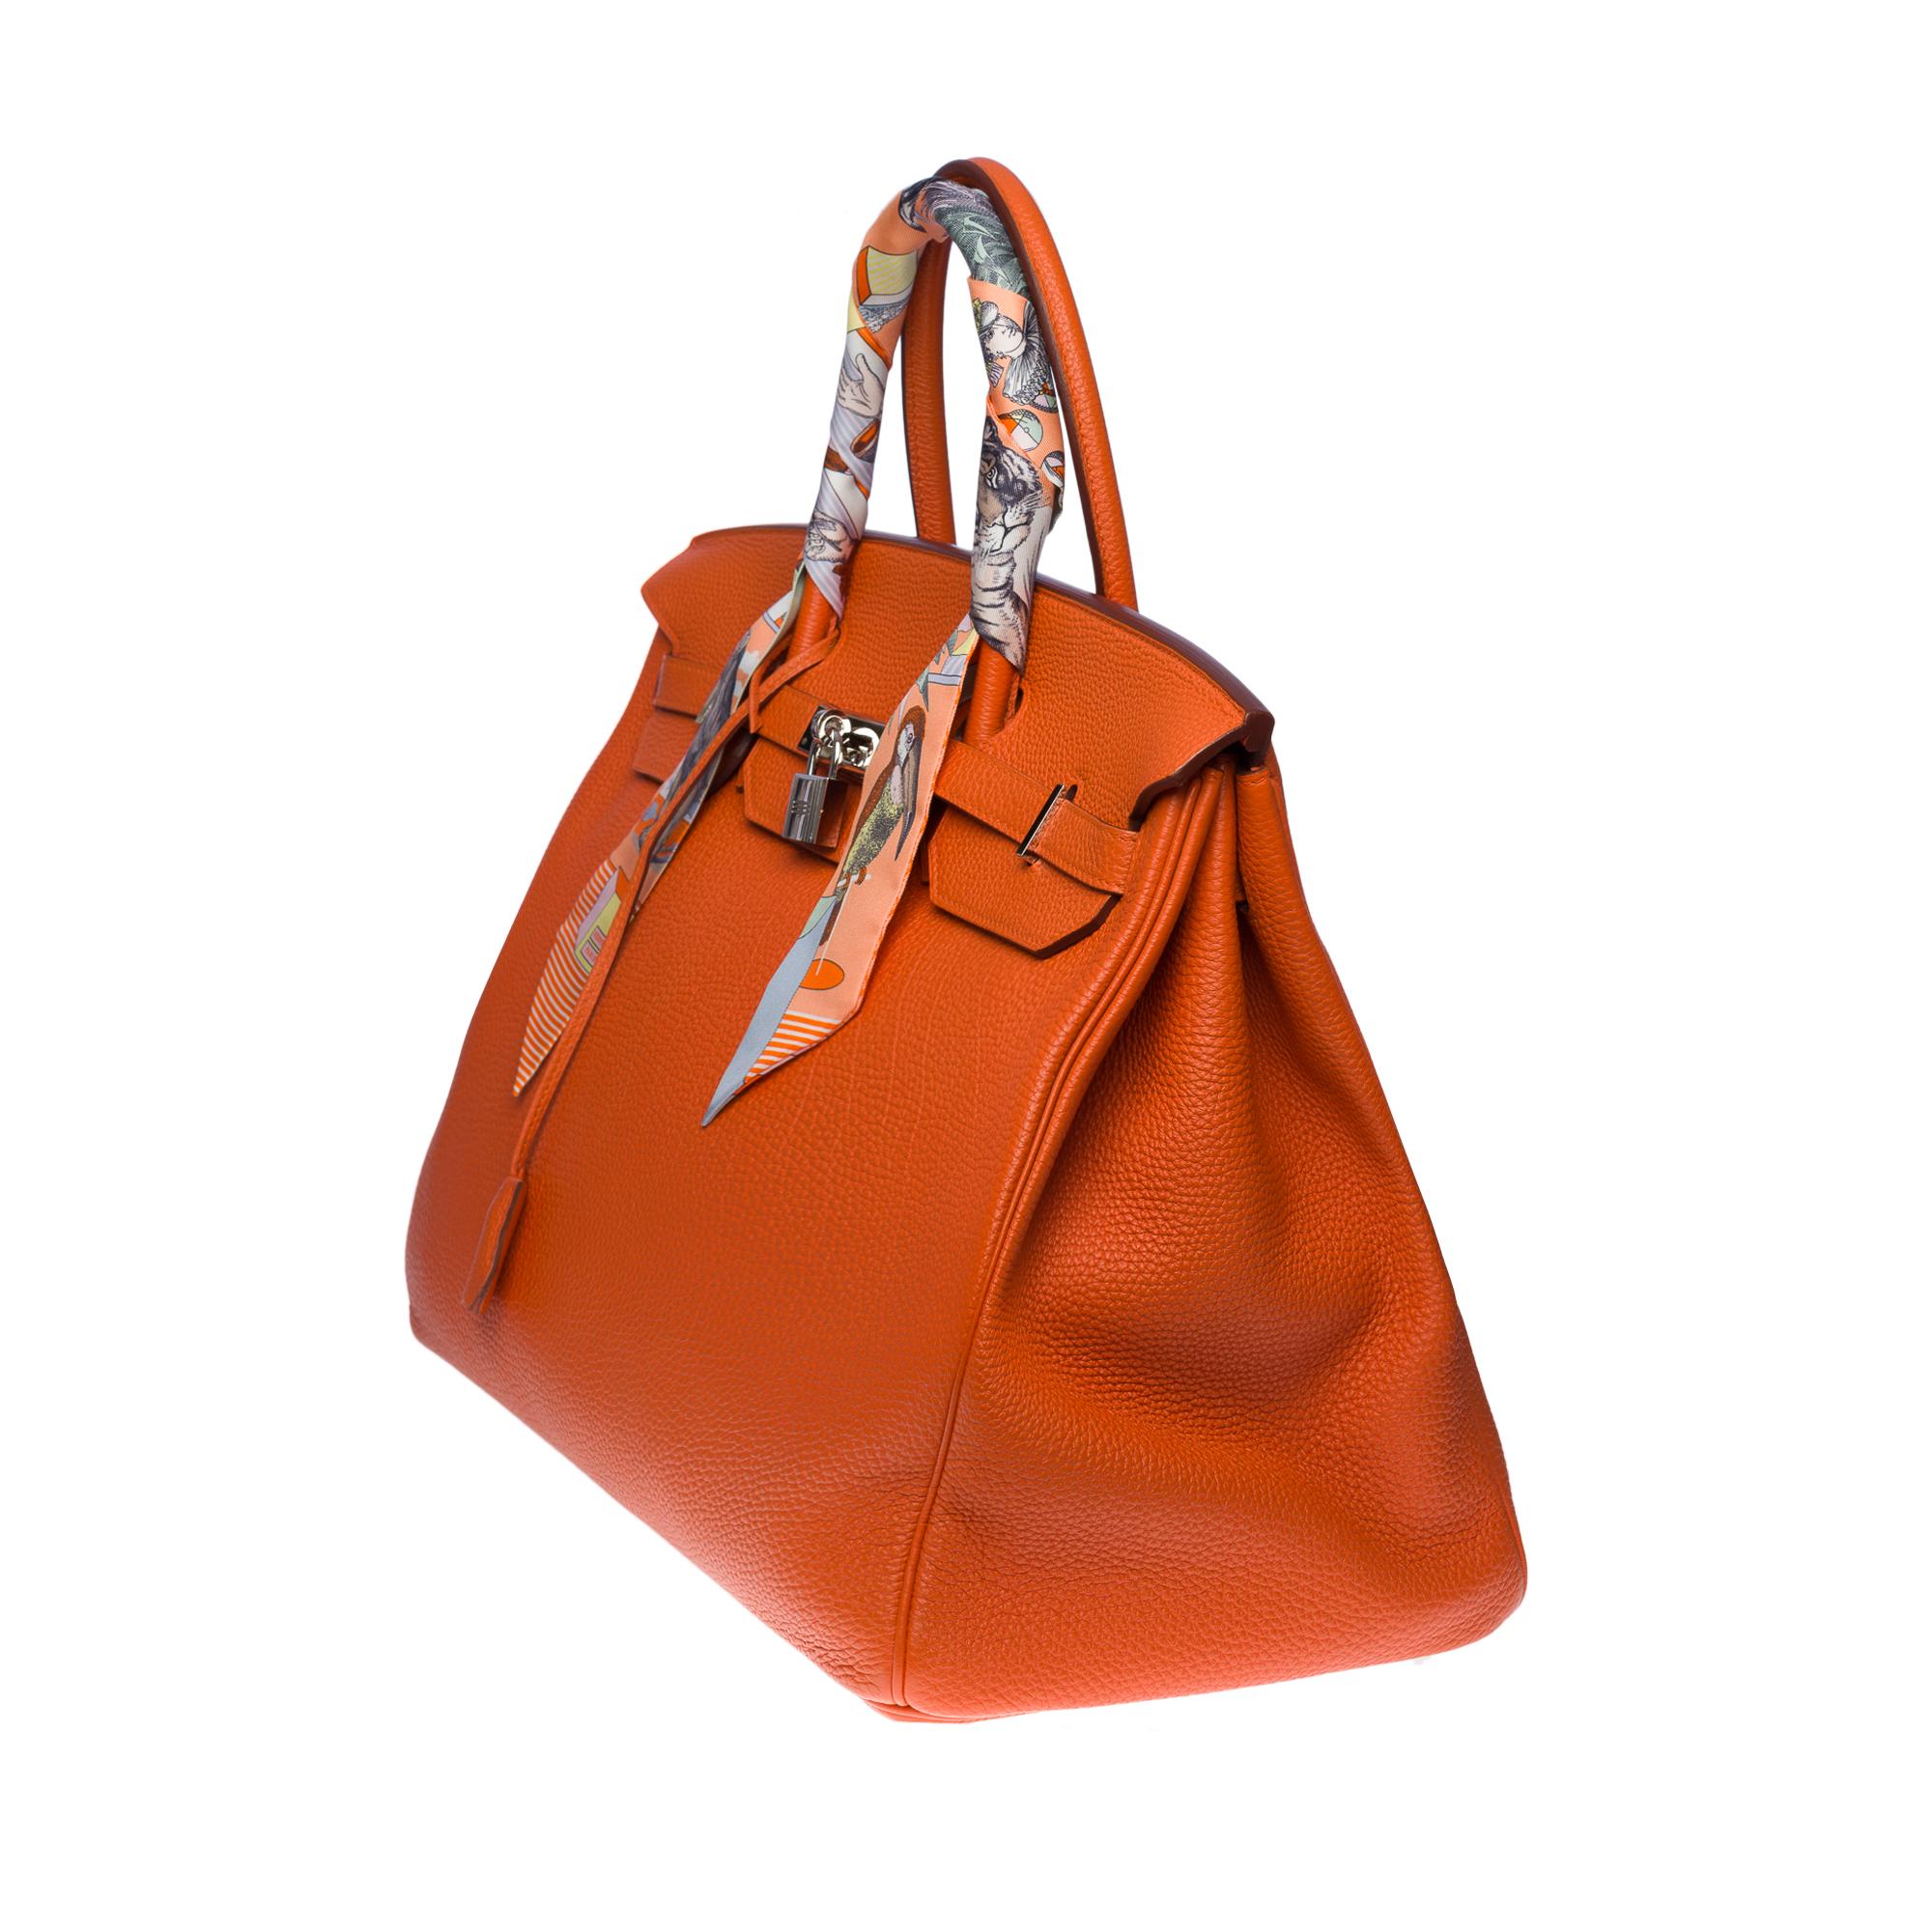 Women's or Men's Stunning Hermes Birkin 40cm handbag in Orange Terre battue Togo leather, SHW